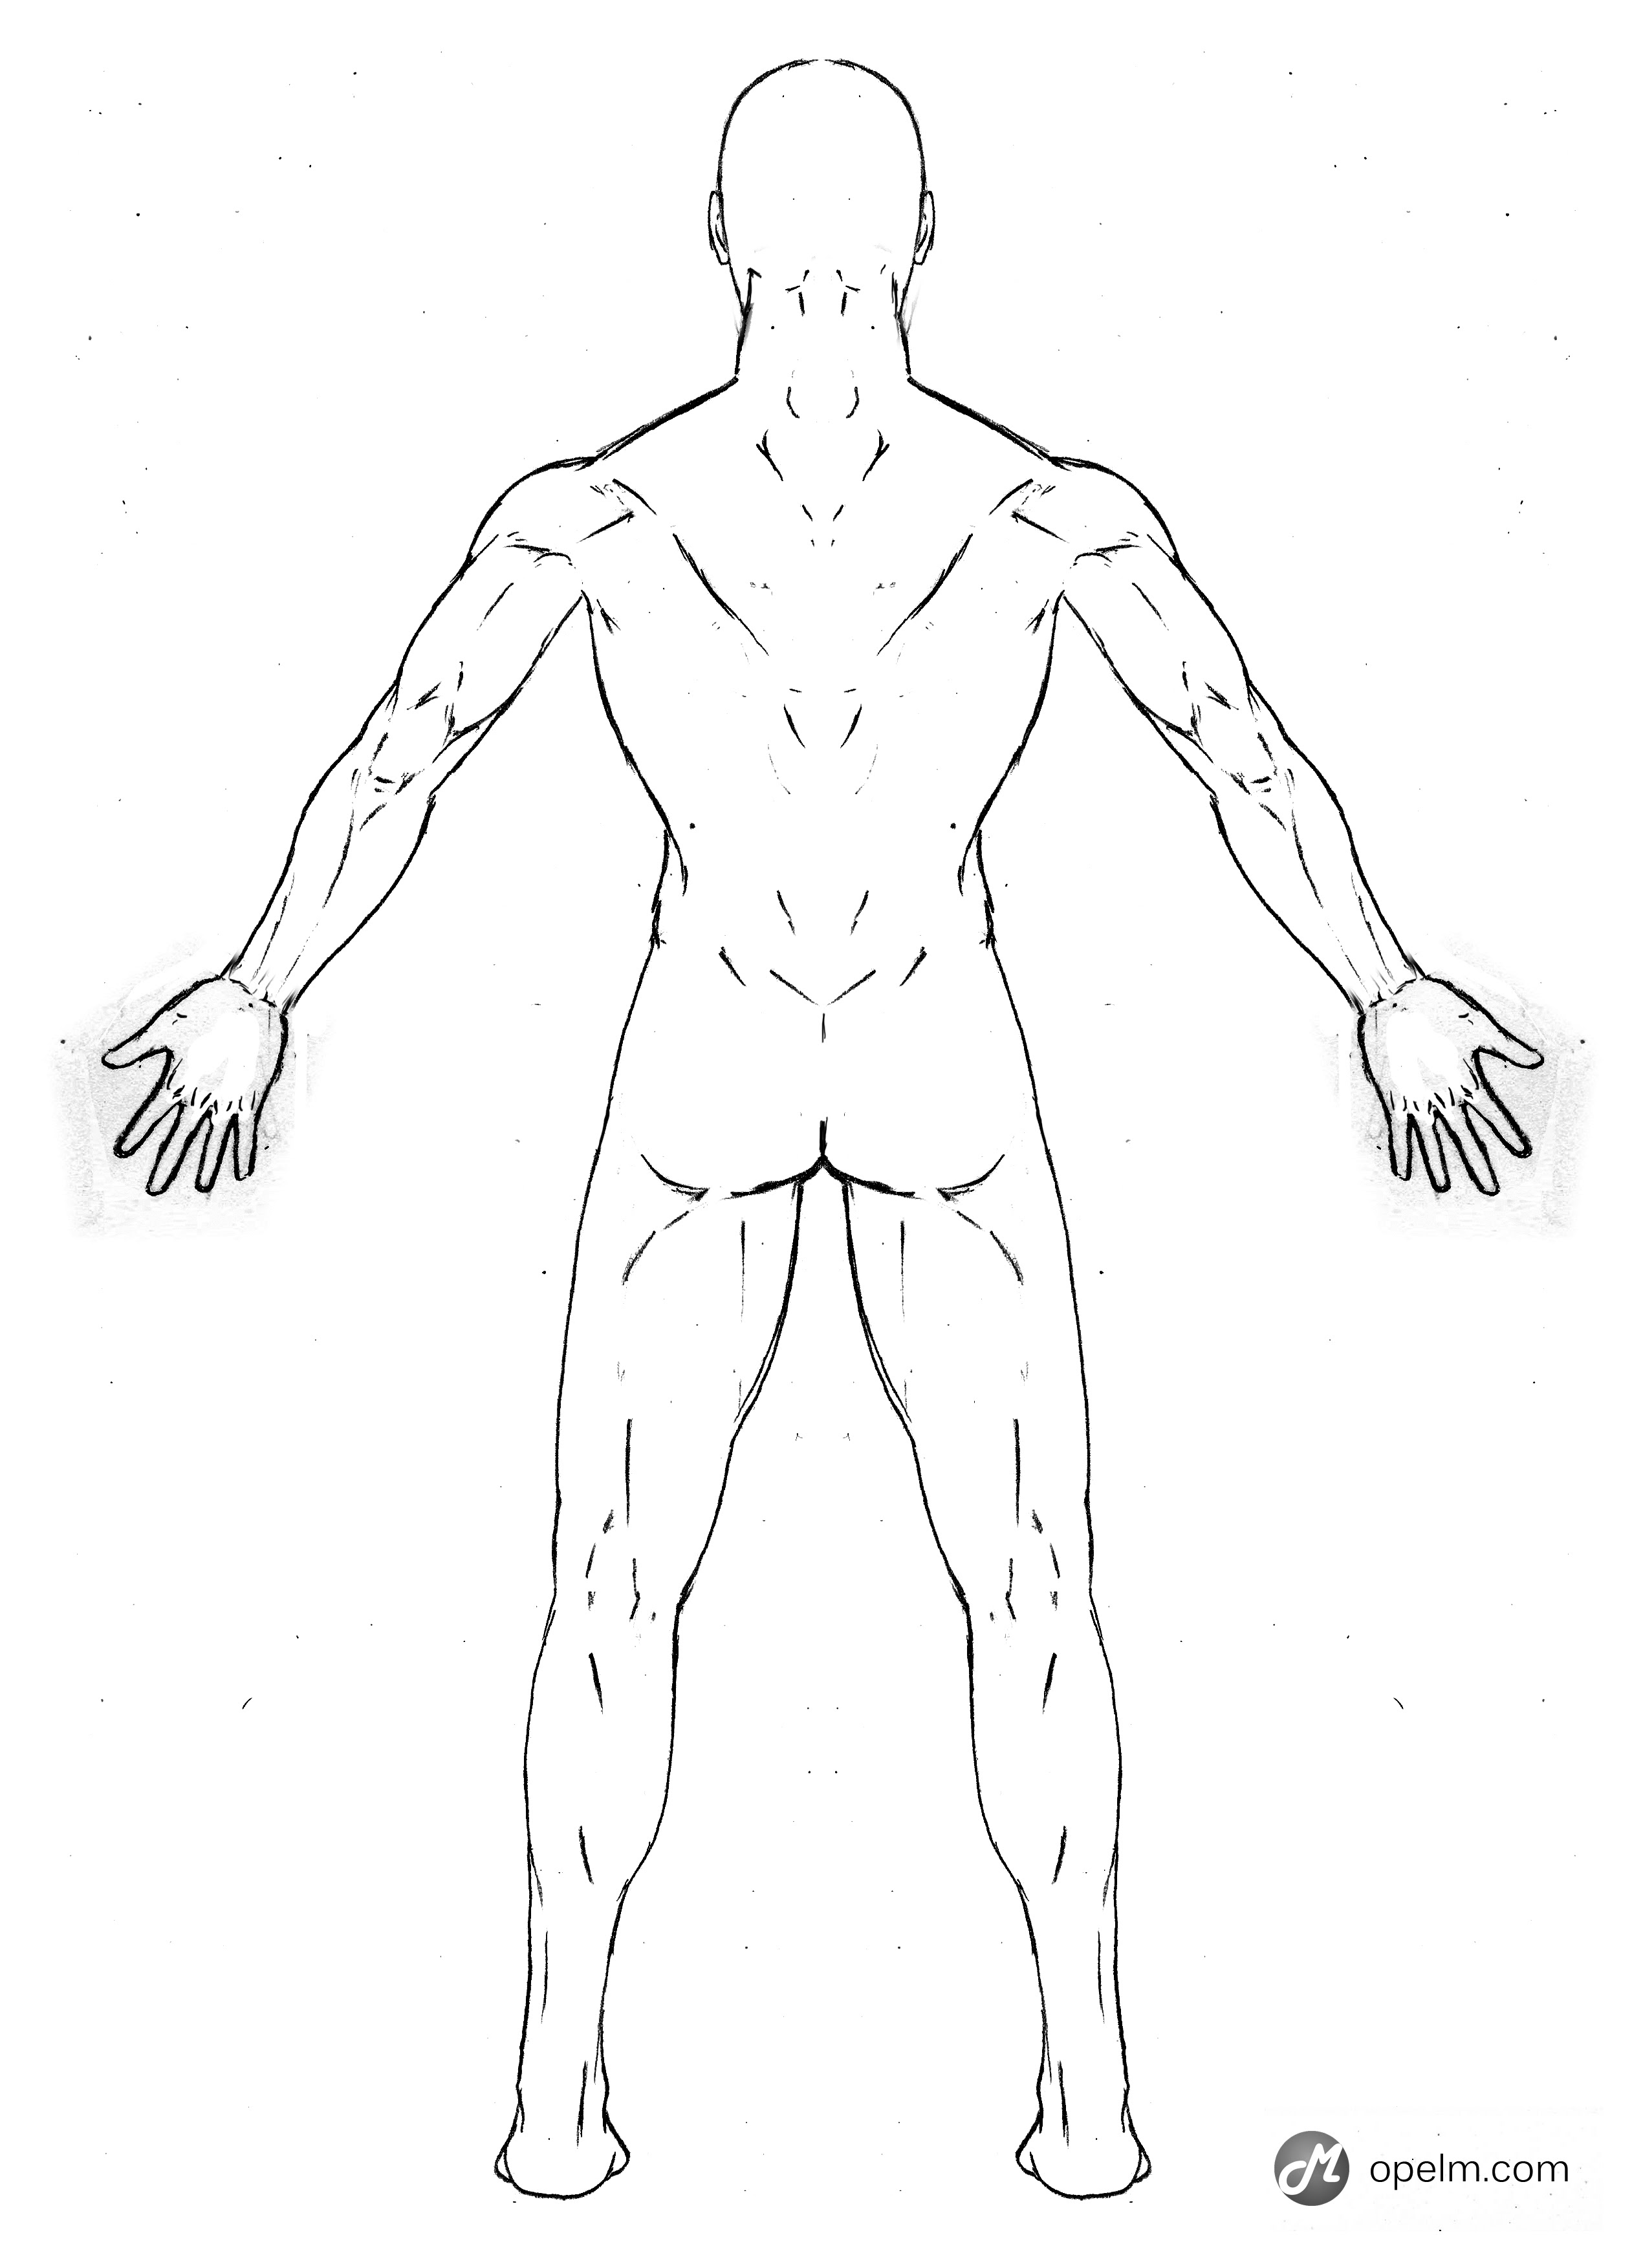 Туловище человека. Схема человека сзади. Тело человека рисунок. Схема тела человека рисунок. Эскиз человеческого тела.